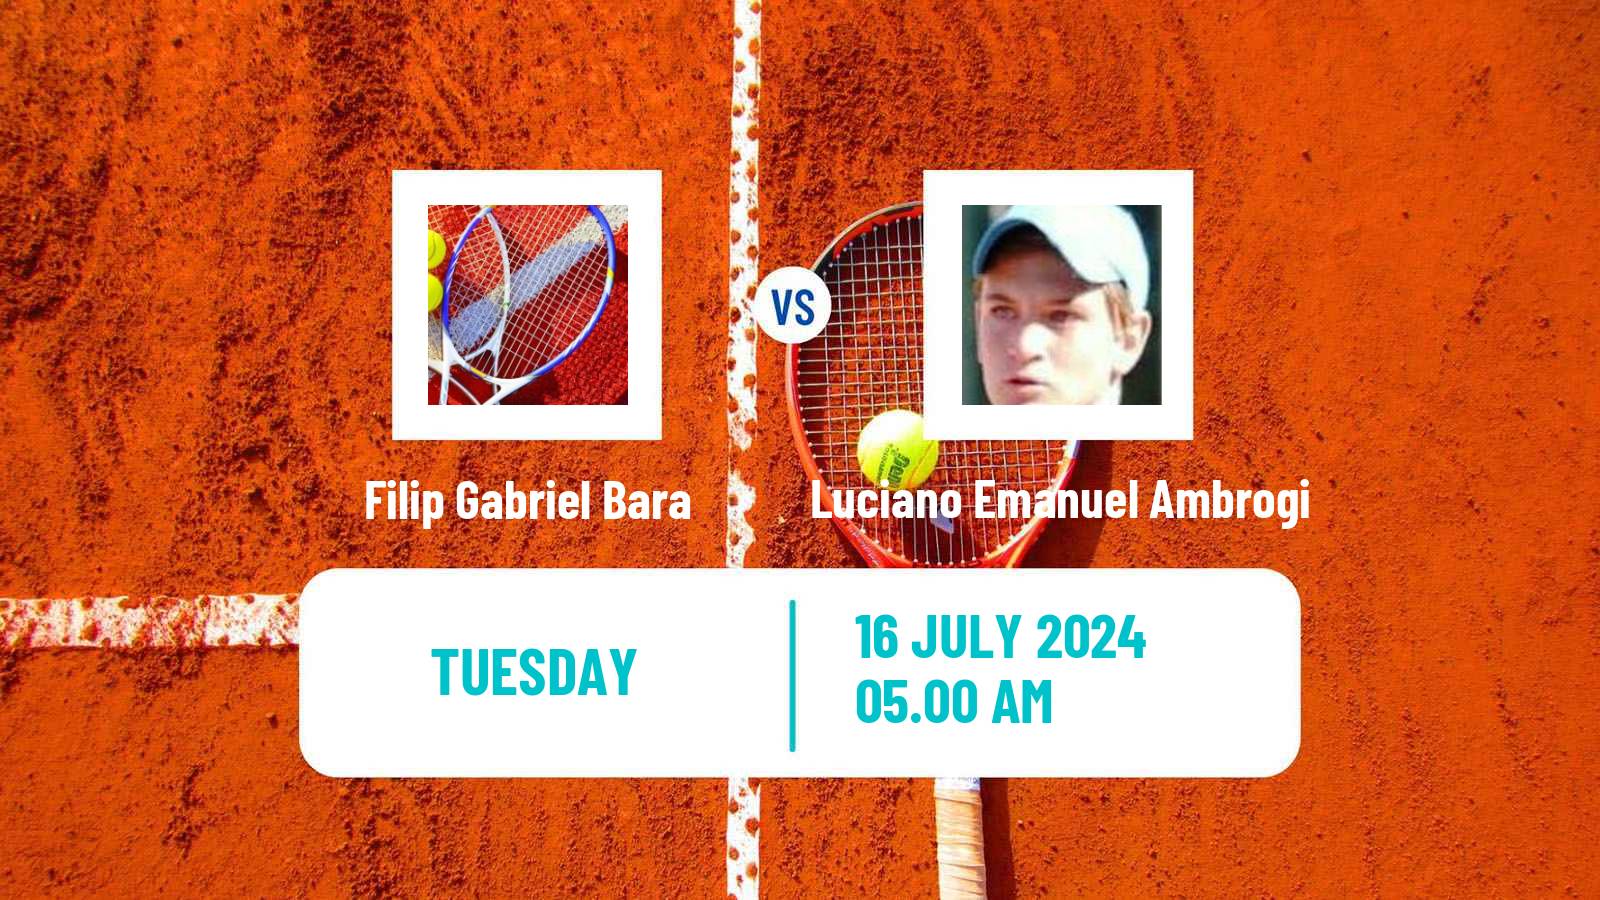 Tennis ITF M15 Bucharest 4 Men Filip Gabriel Bara - Luciano Emanuel Ambrogi